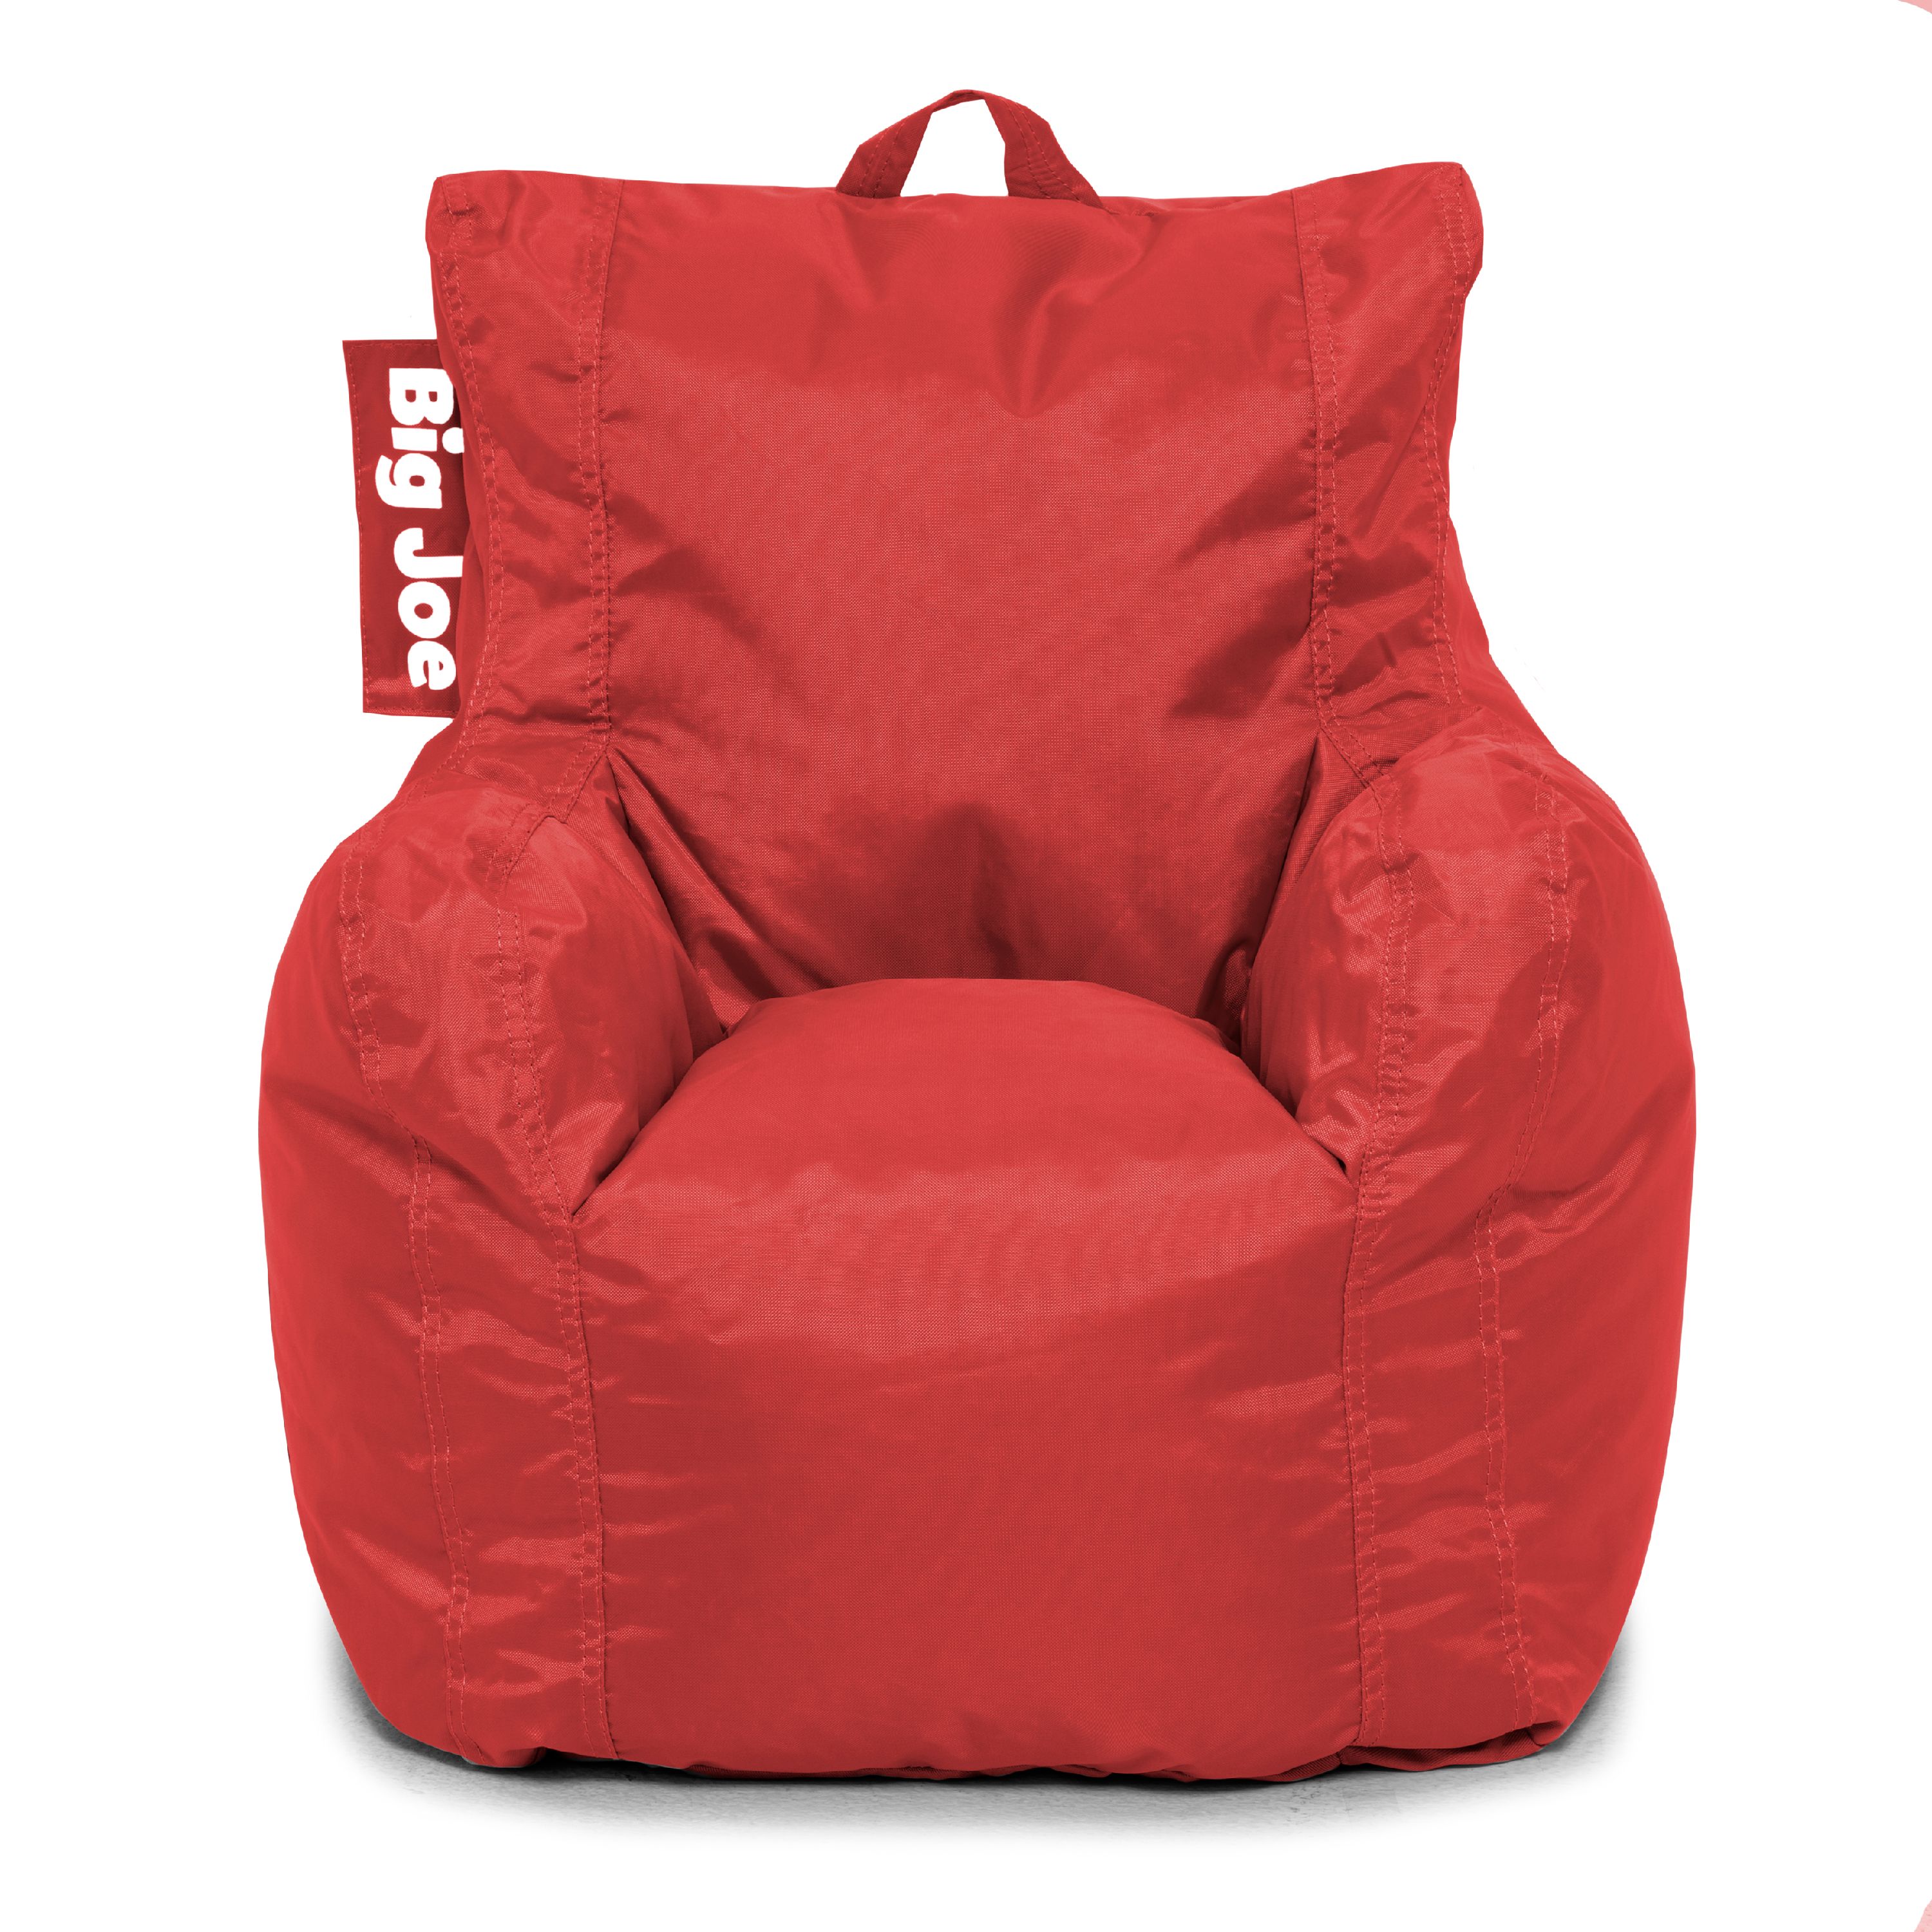 Big Joe Cuddle Bean Bag Chair, Multiple Colors - image 5 of 6